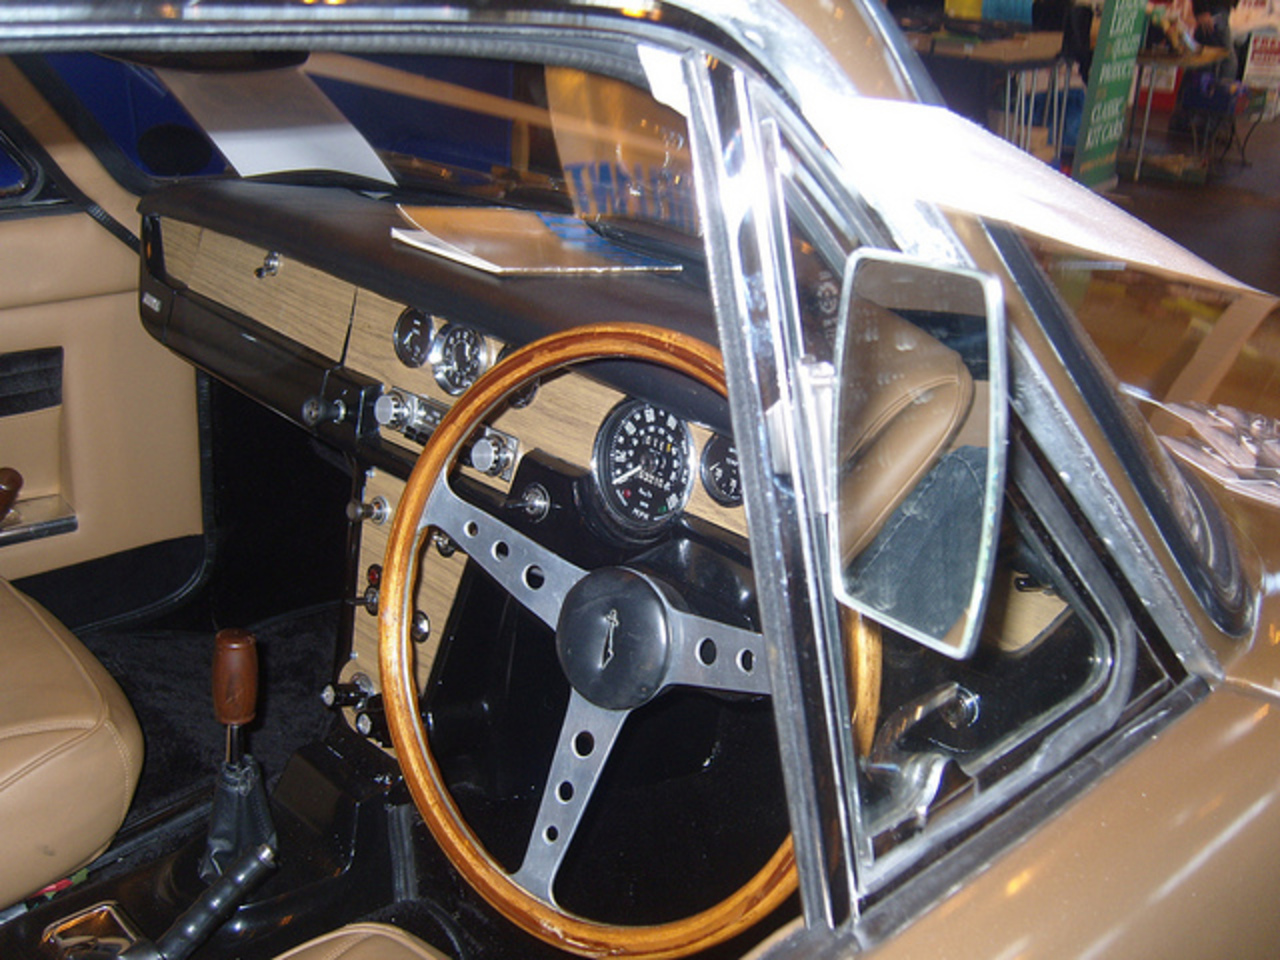 Reliant Scimitar GT interior | Flickr - Photo Sharing!